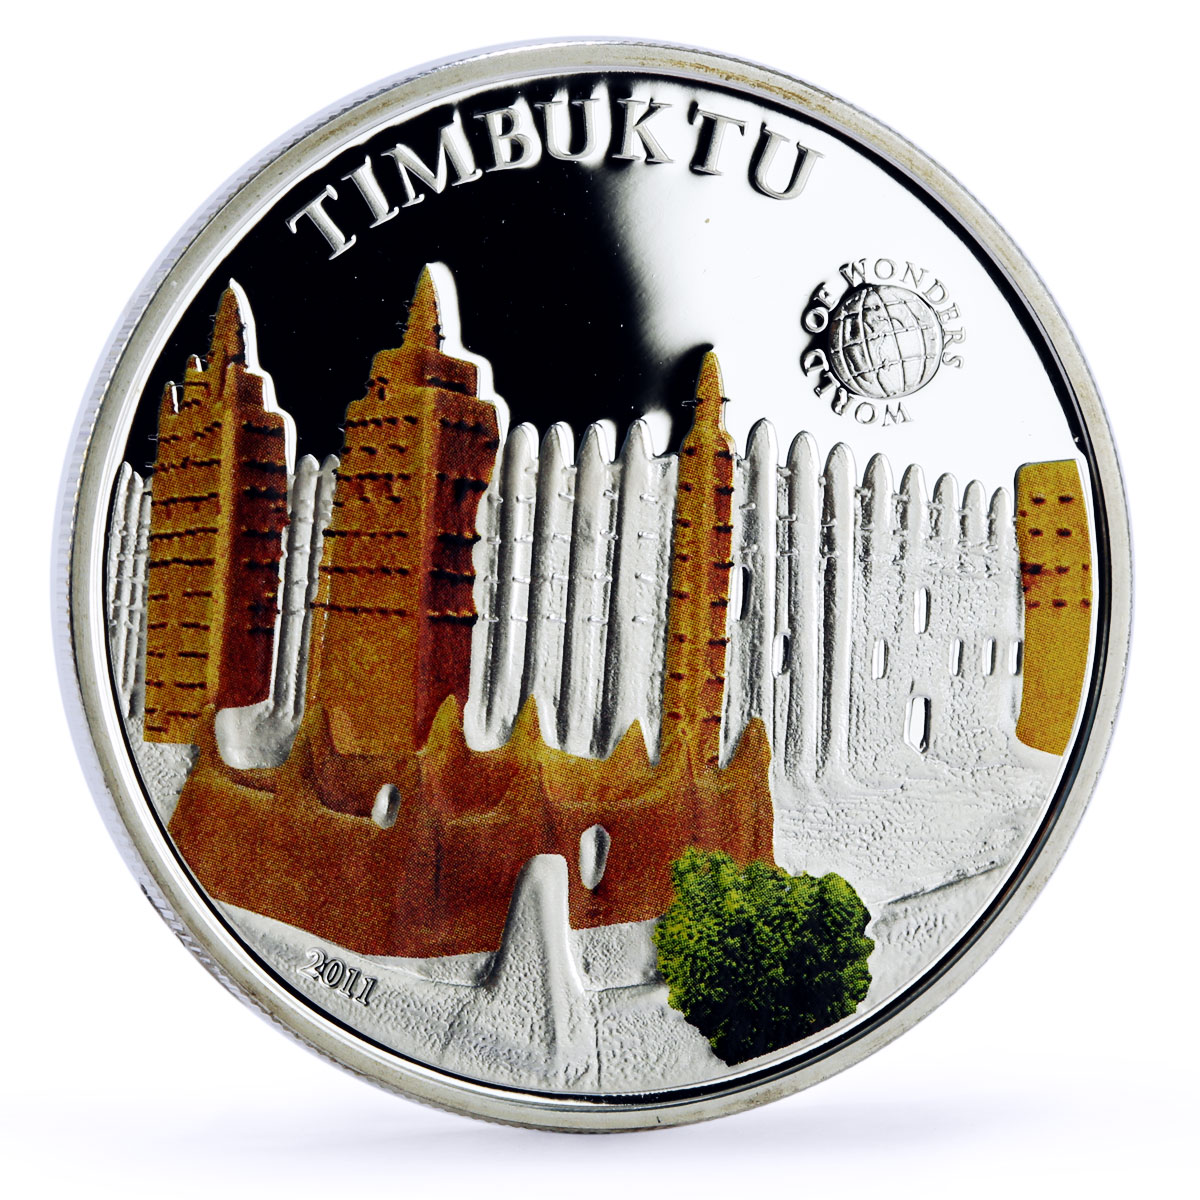 Palau 5 dollars World of Wonders Timbuktu City Architecture silver coin 2011